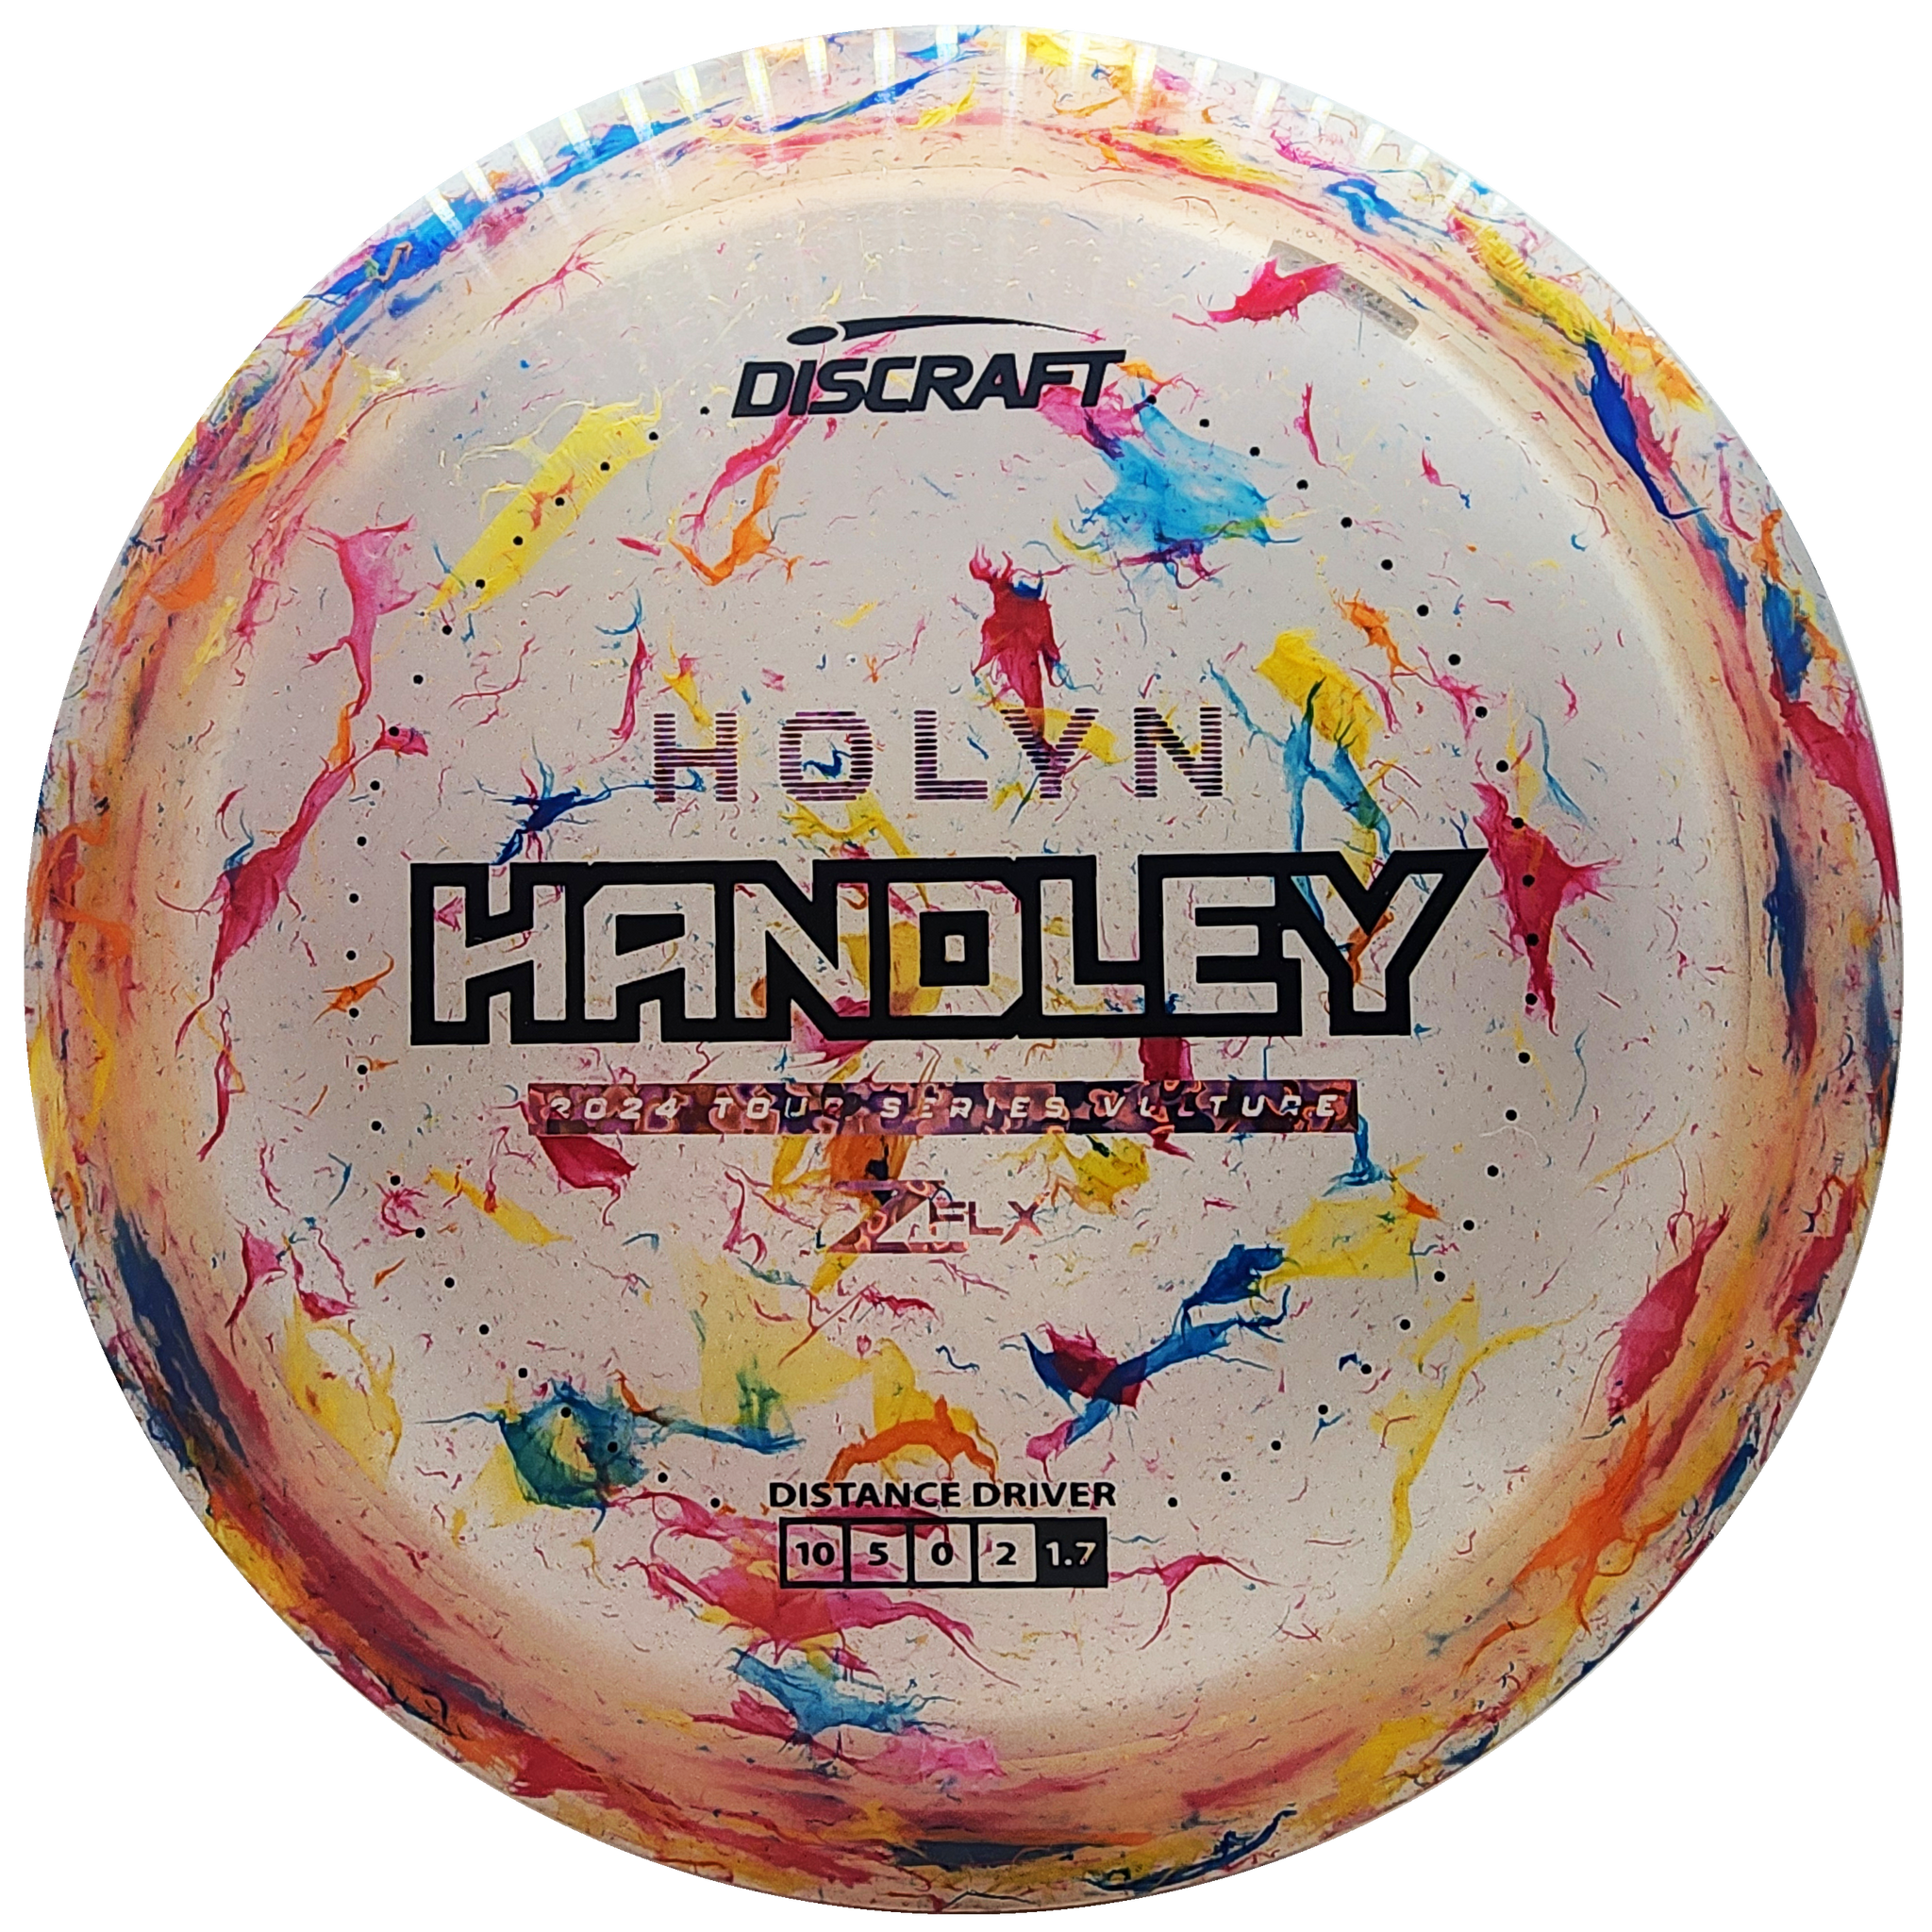 Discraft: 2024 Holyn Handley Tour Series Vulture - Black/Pink